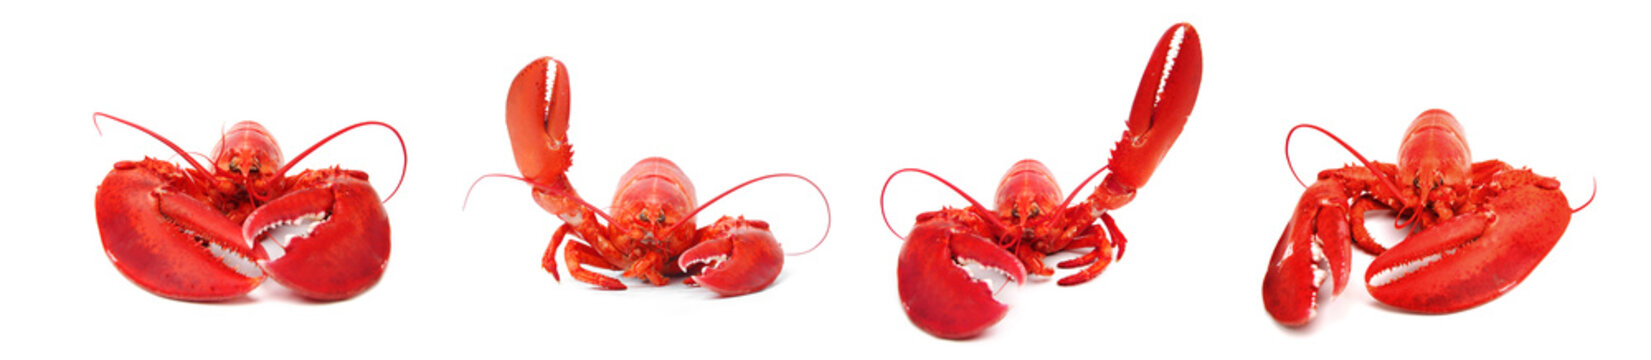 hello lobster set